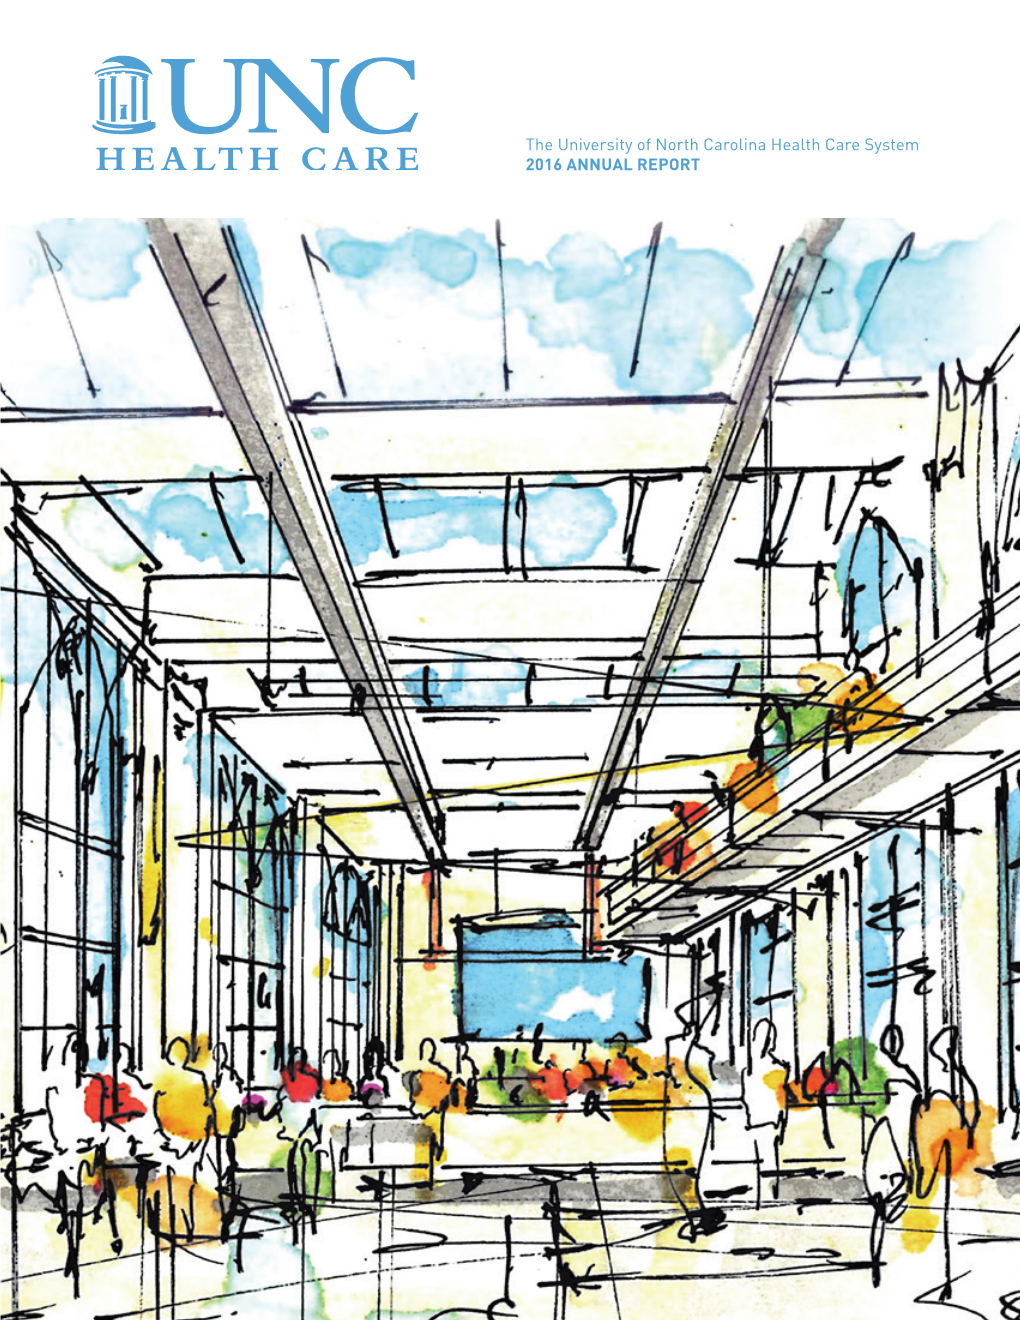 The University of North Carolina Health Care System 2016